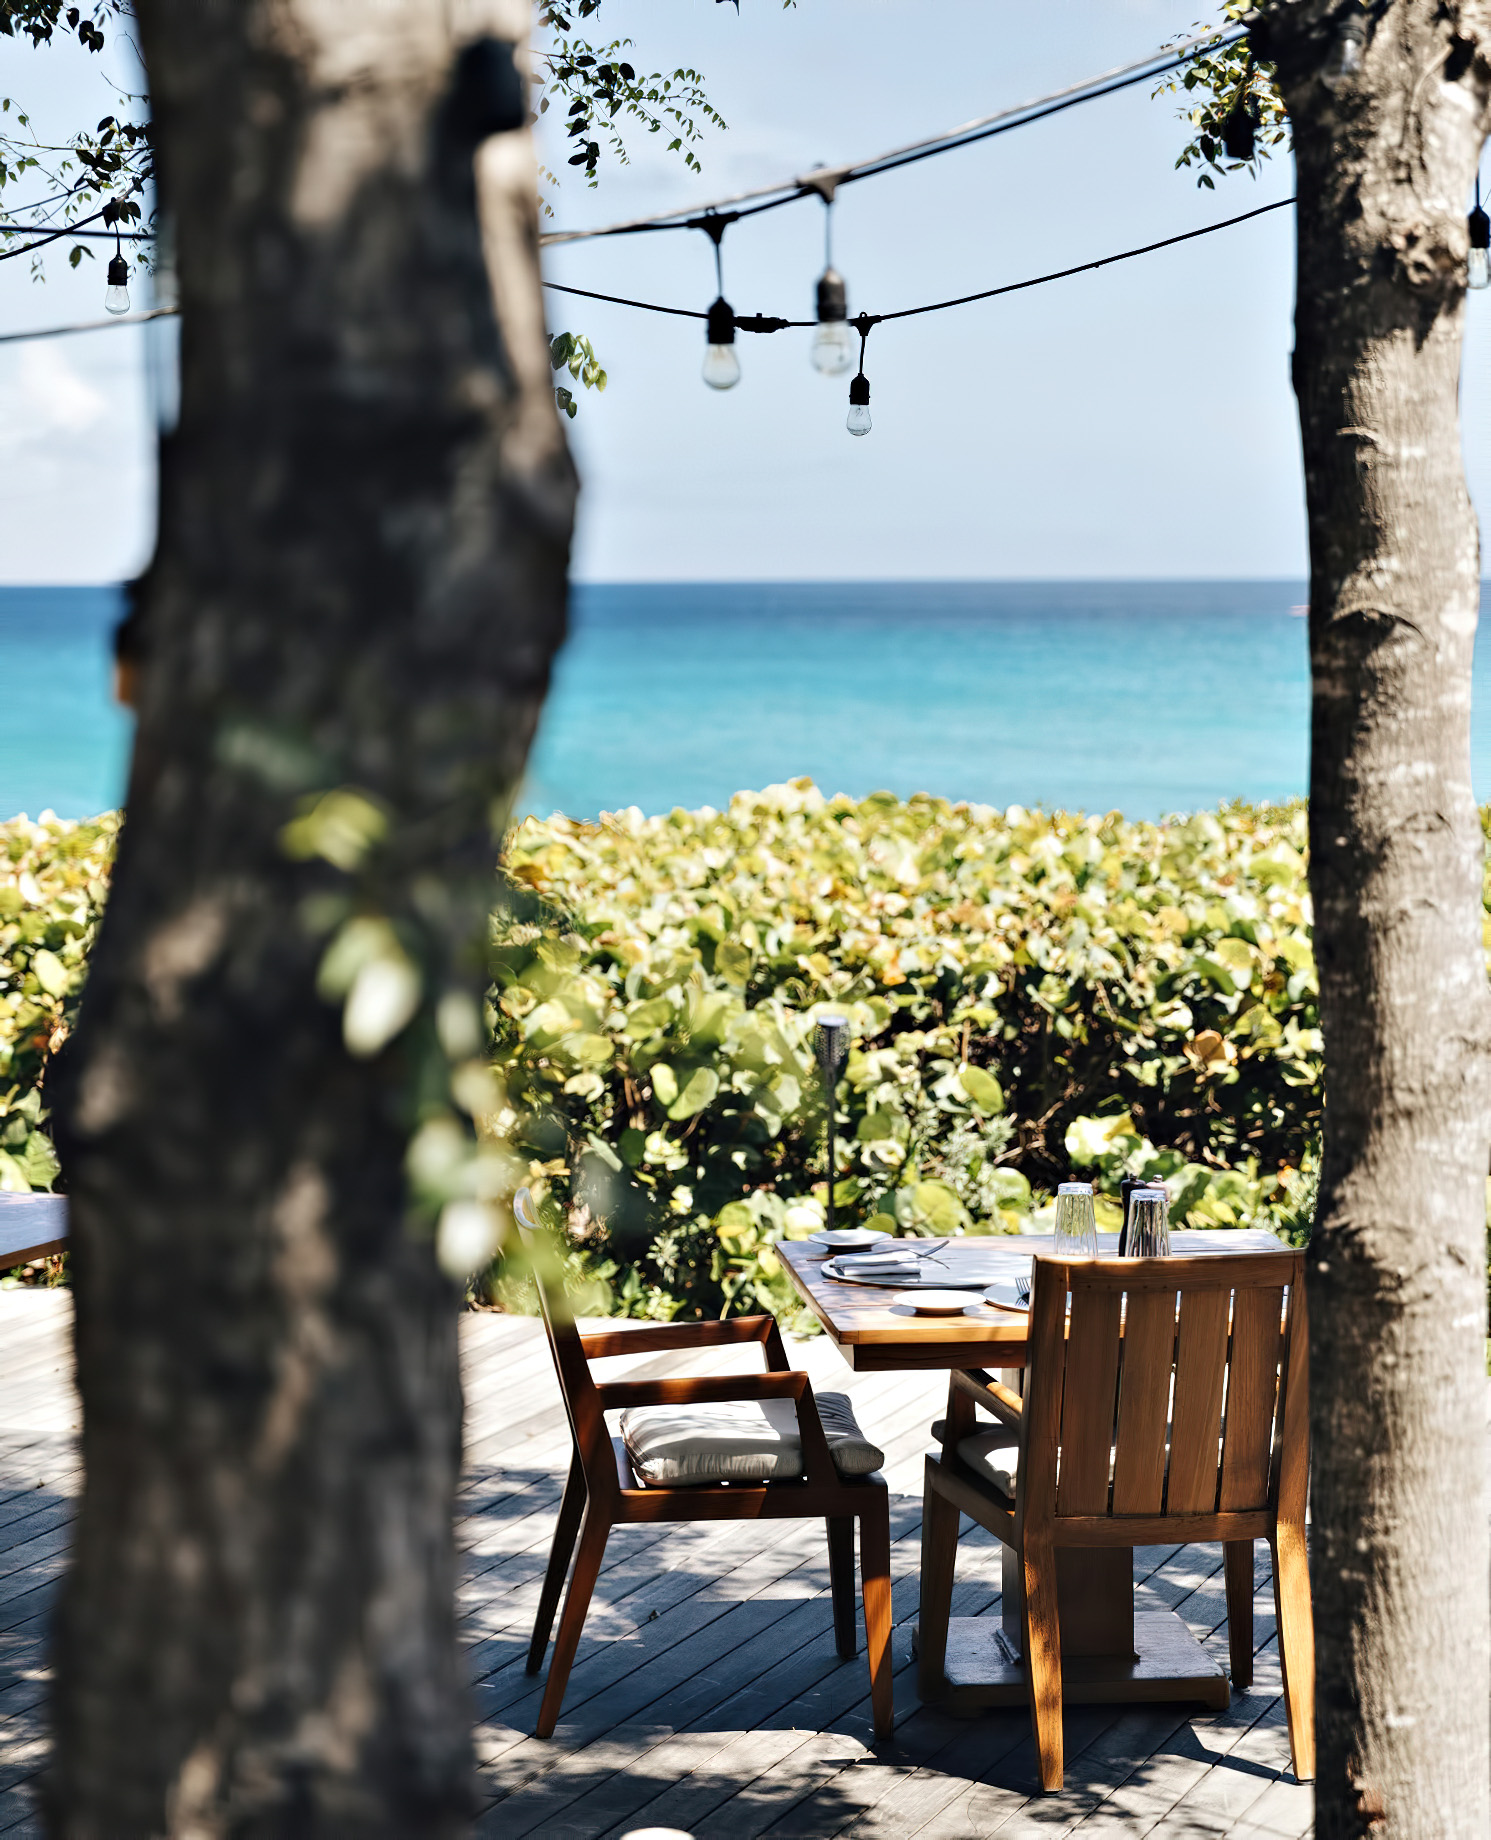 Amanyara Resort – Providenciales, Turks and Caicos Islands – Dining Simplicity